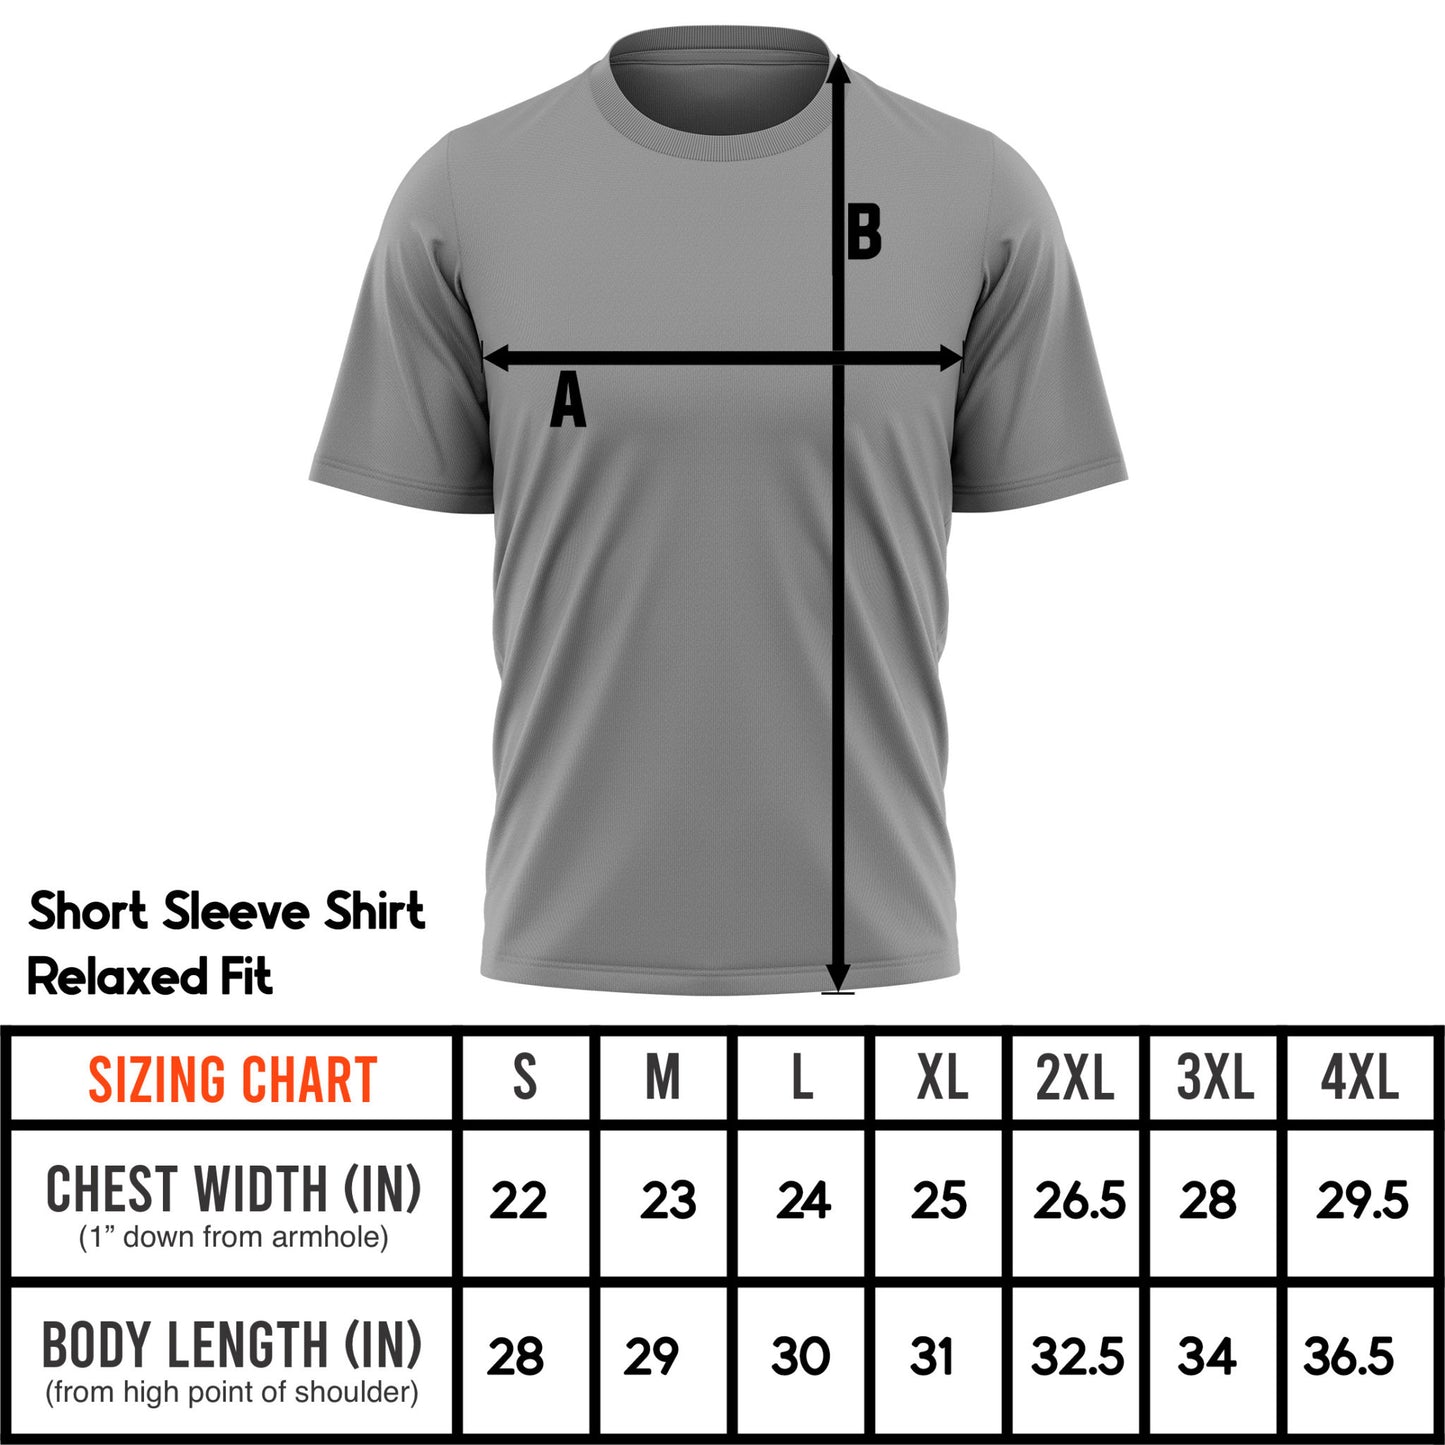 Smash It Sports Short Sleeve Shirt - The Valley